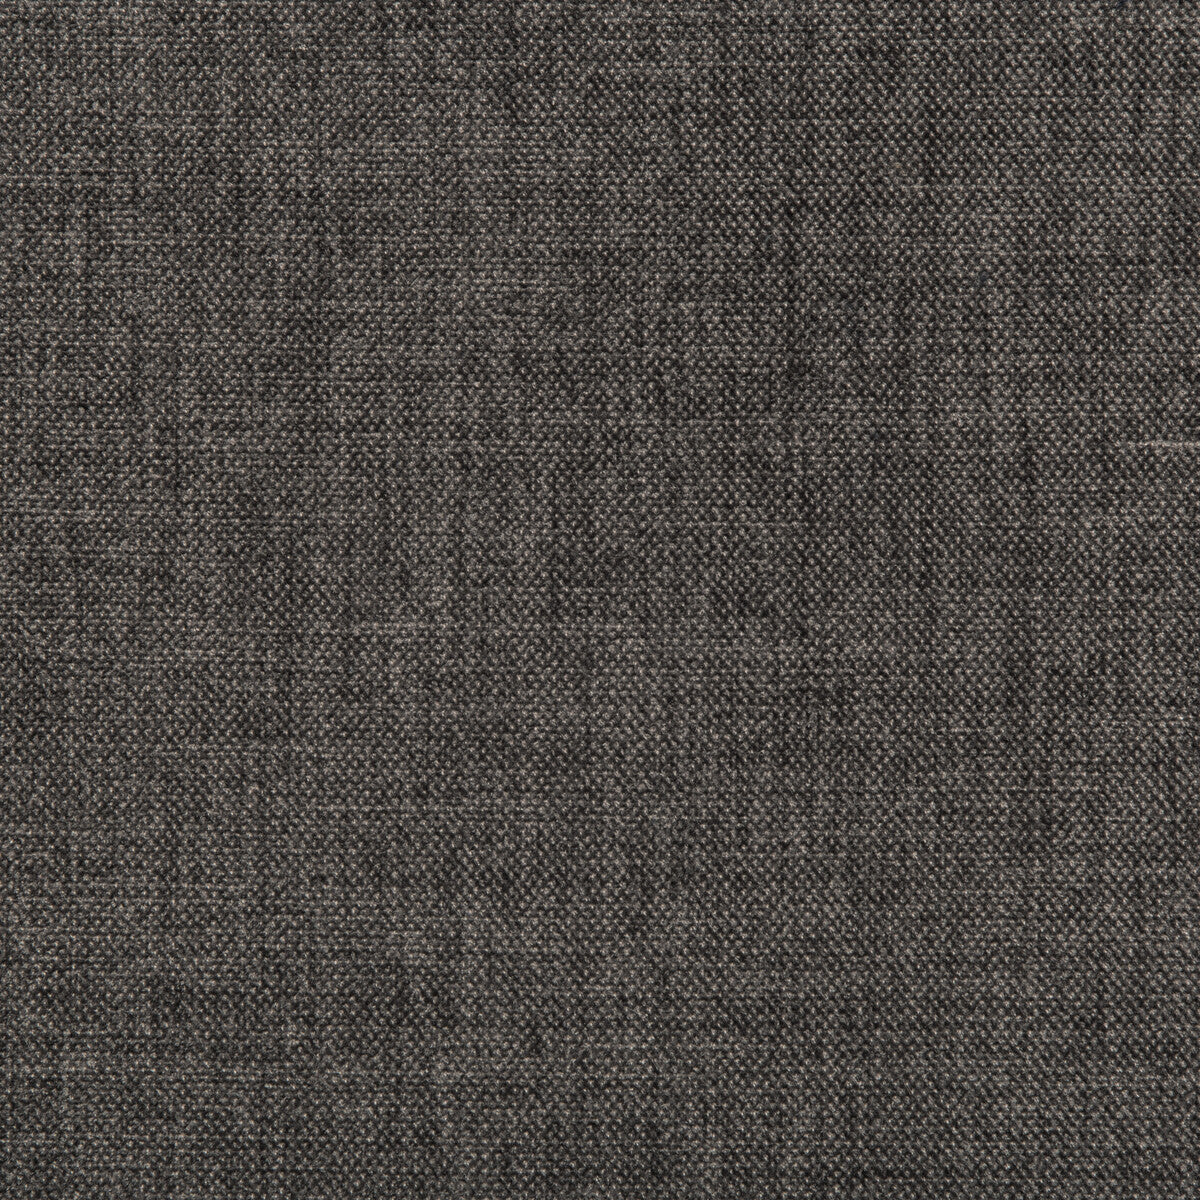 Kravet Smart fabric in 29484-11 color - pattern 29484.11.0 - by Kravet Smart